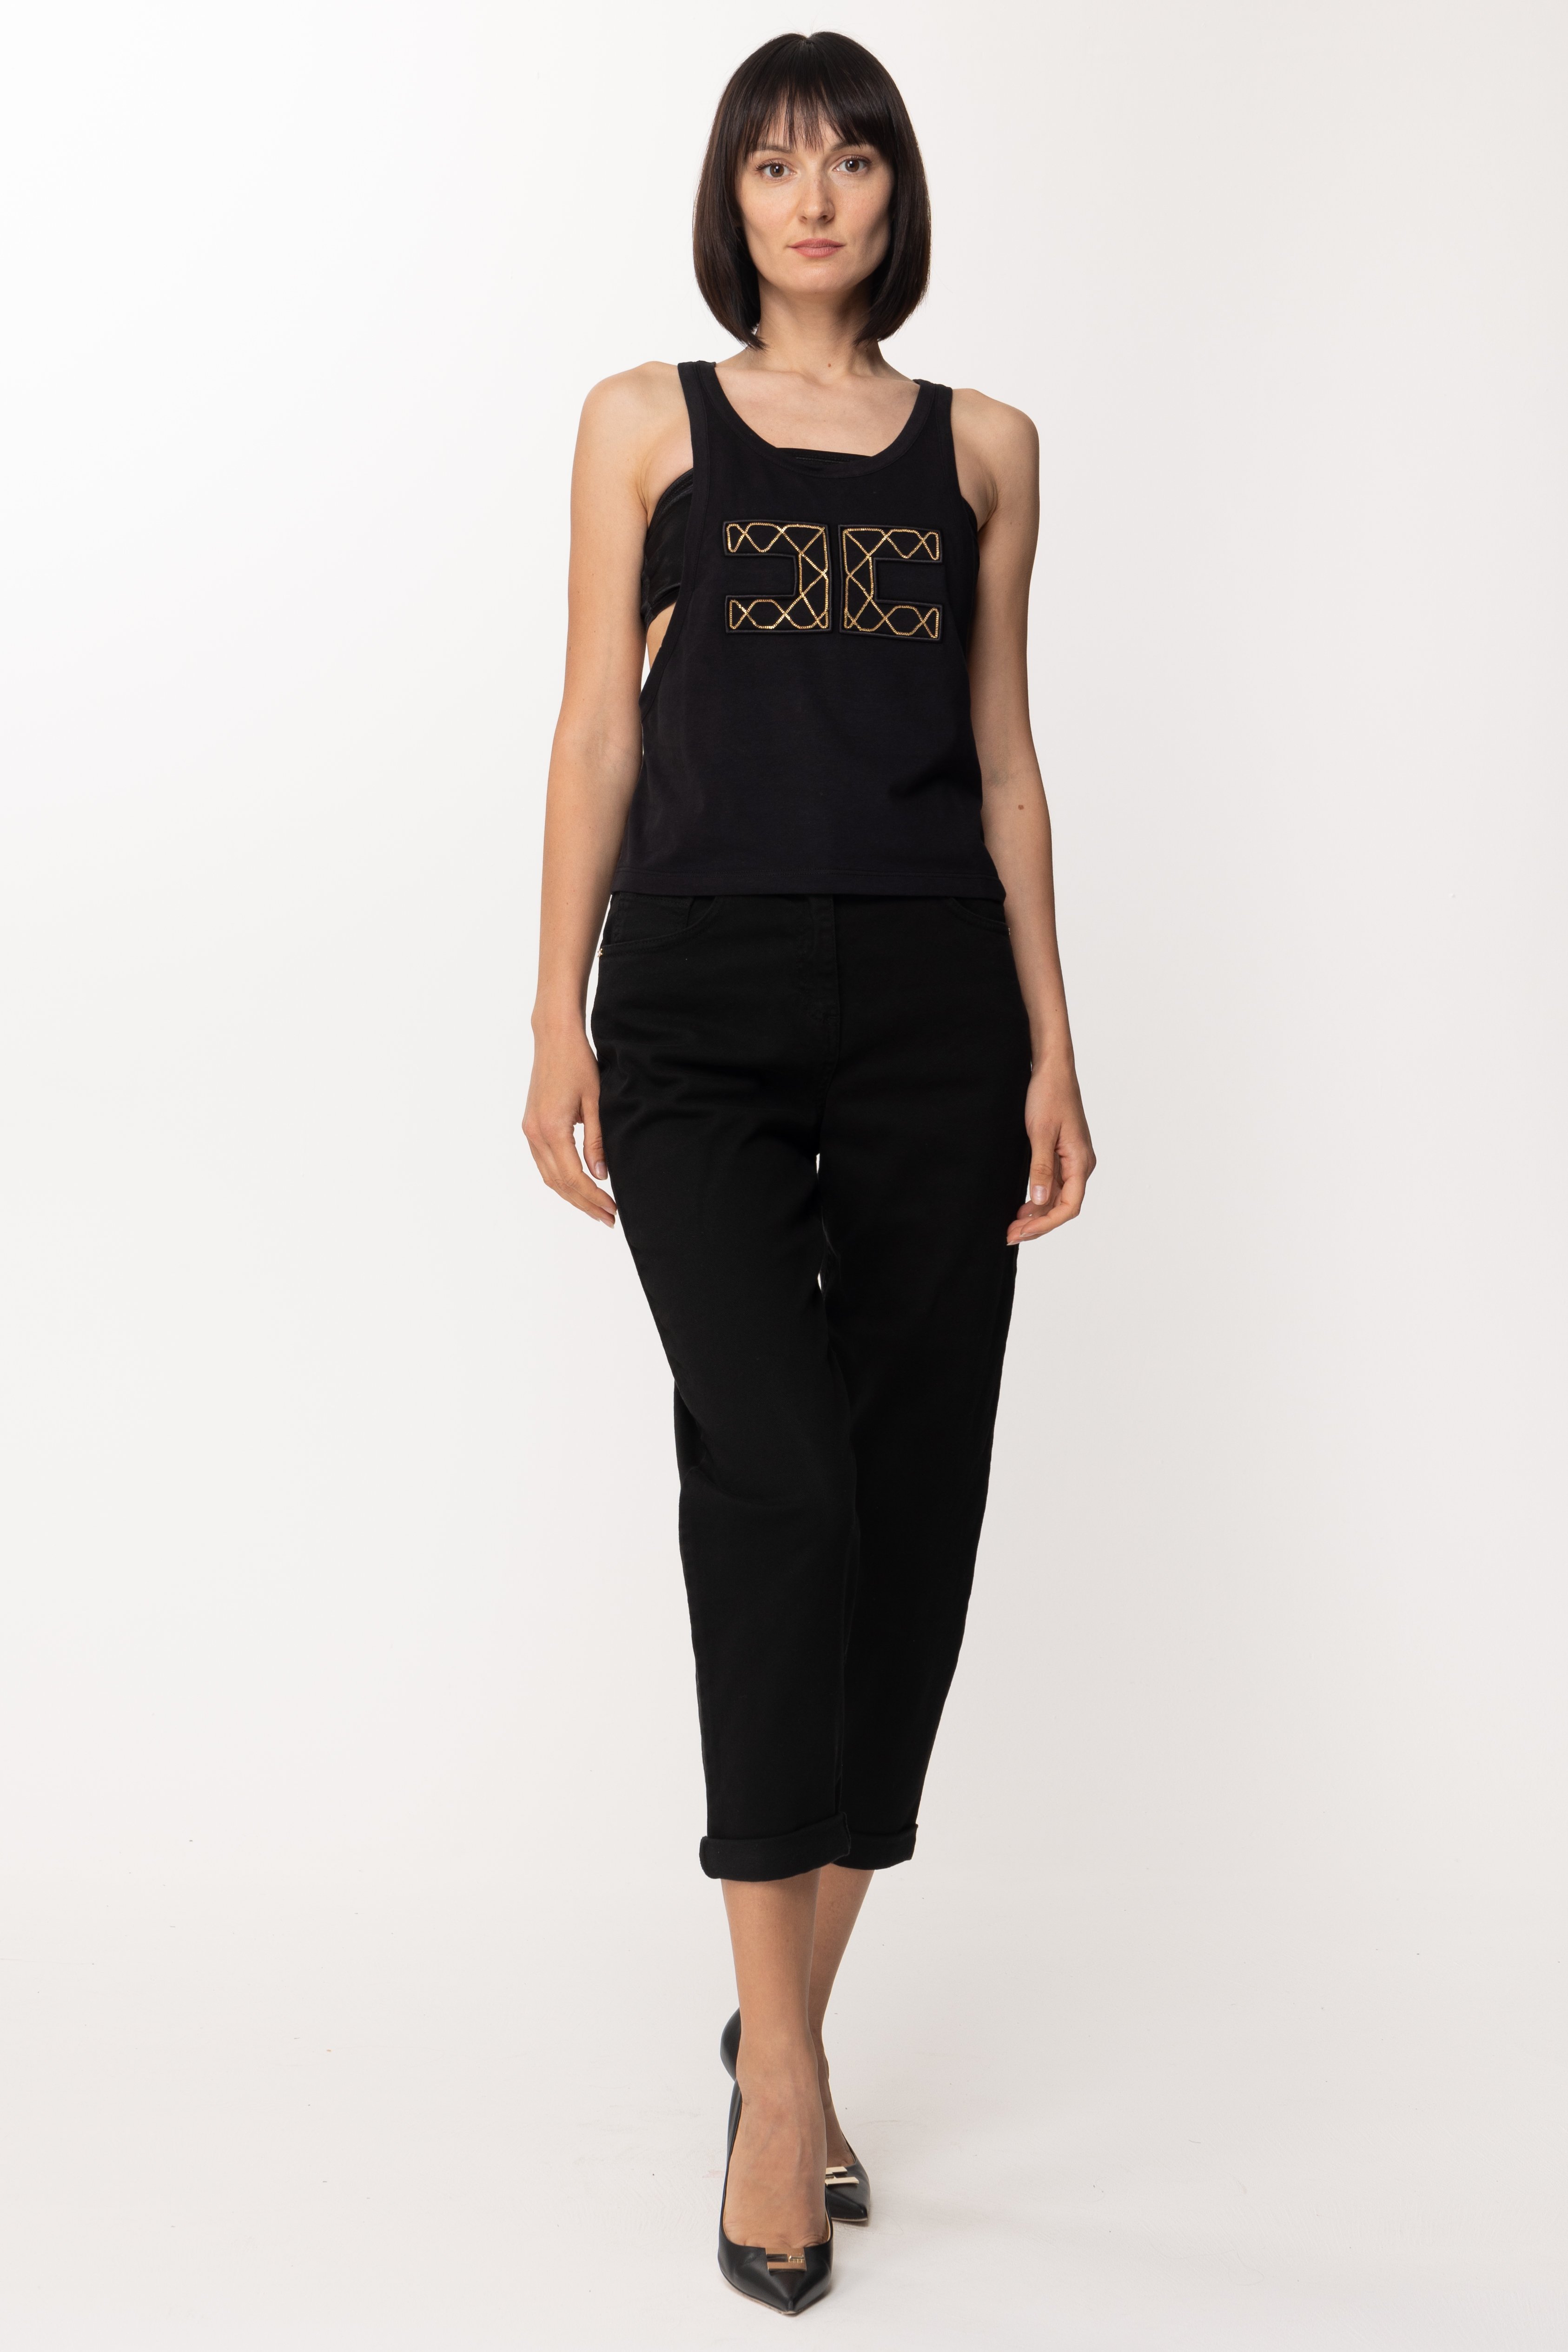 Vista previa: Elisabetta Franchi Camiseta sin mangas con logo bordado Nero